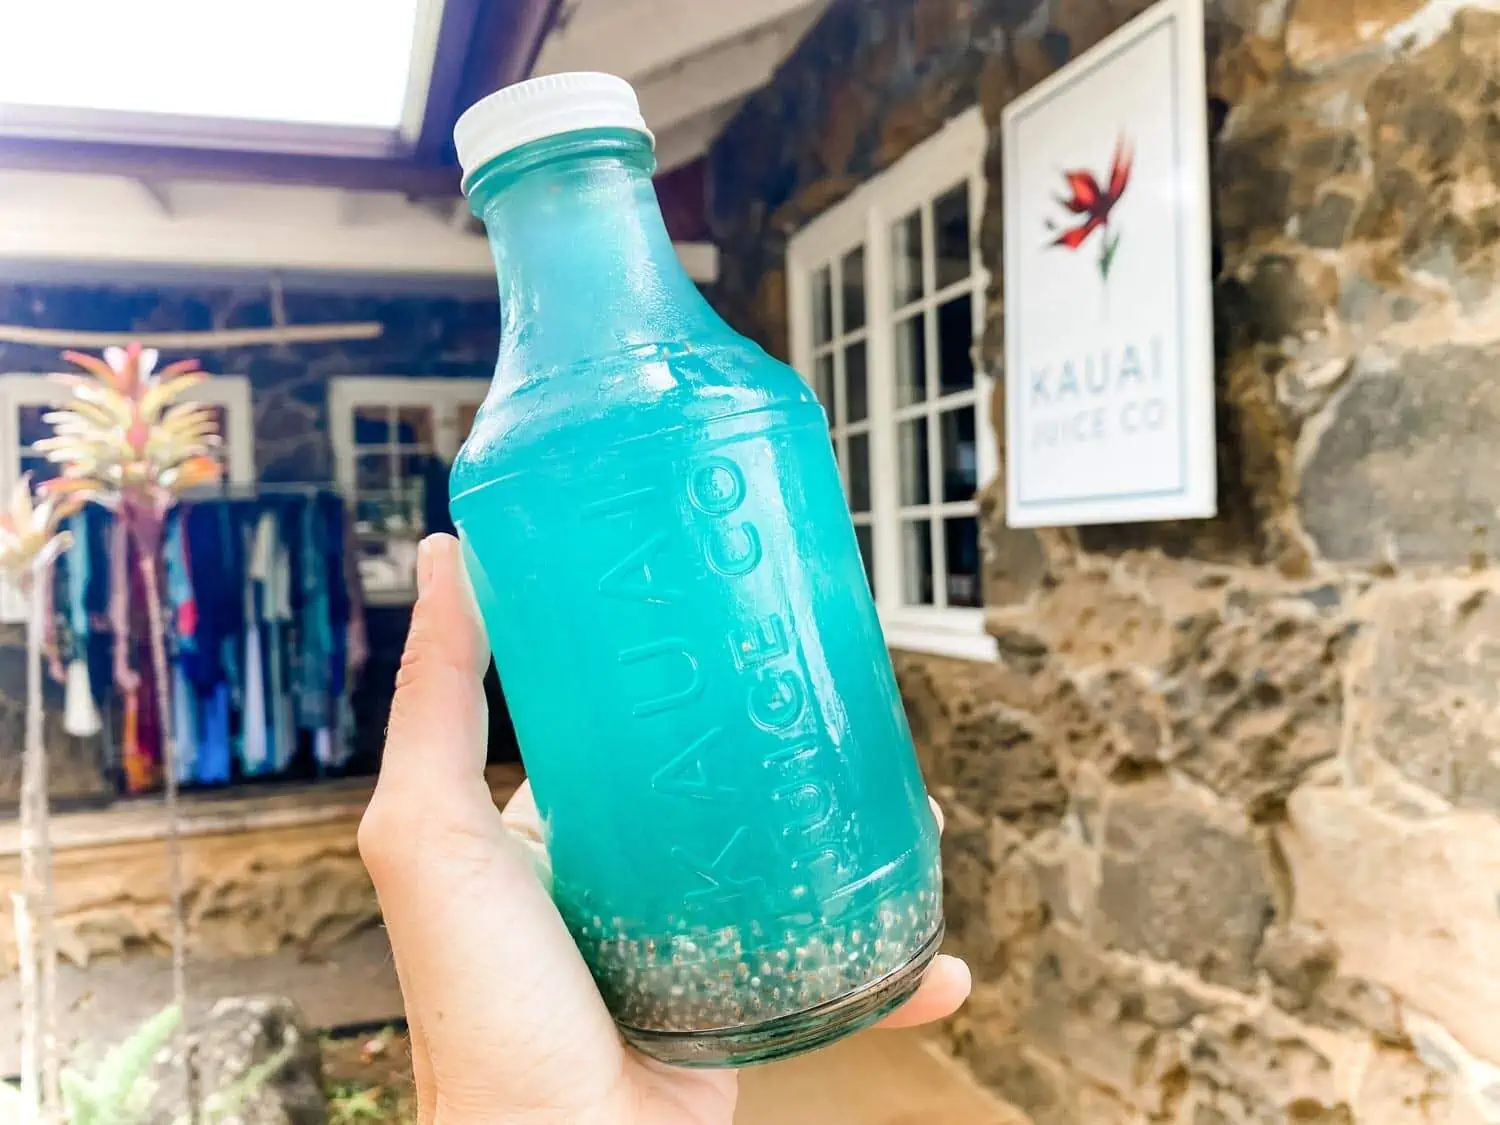 The Avatar Blue Juice from Kauai Juice Co in Hawaii 